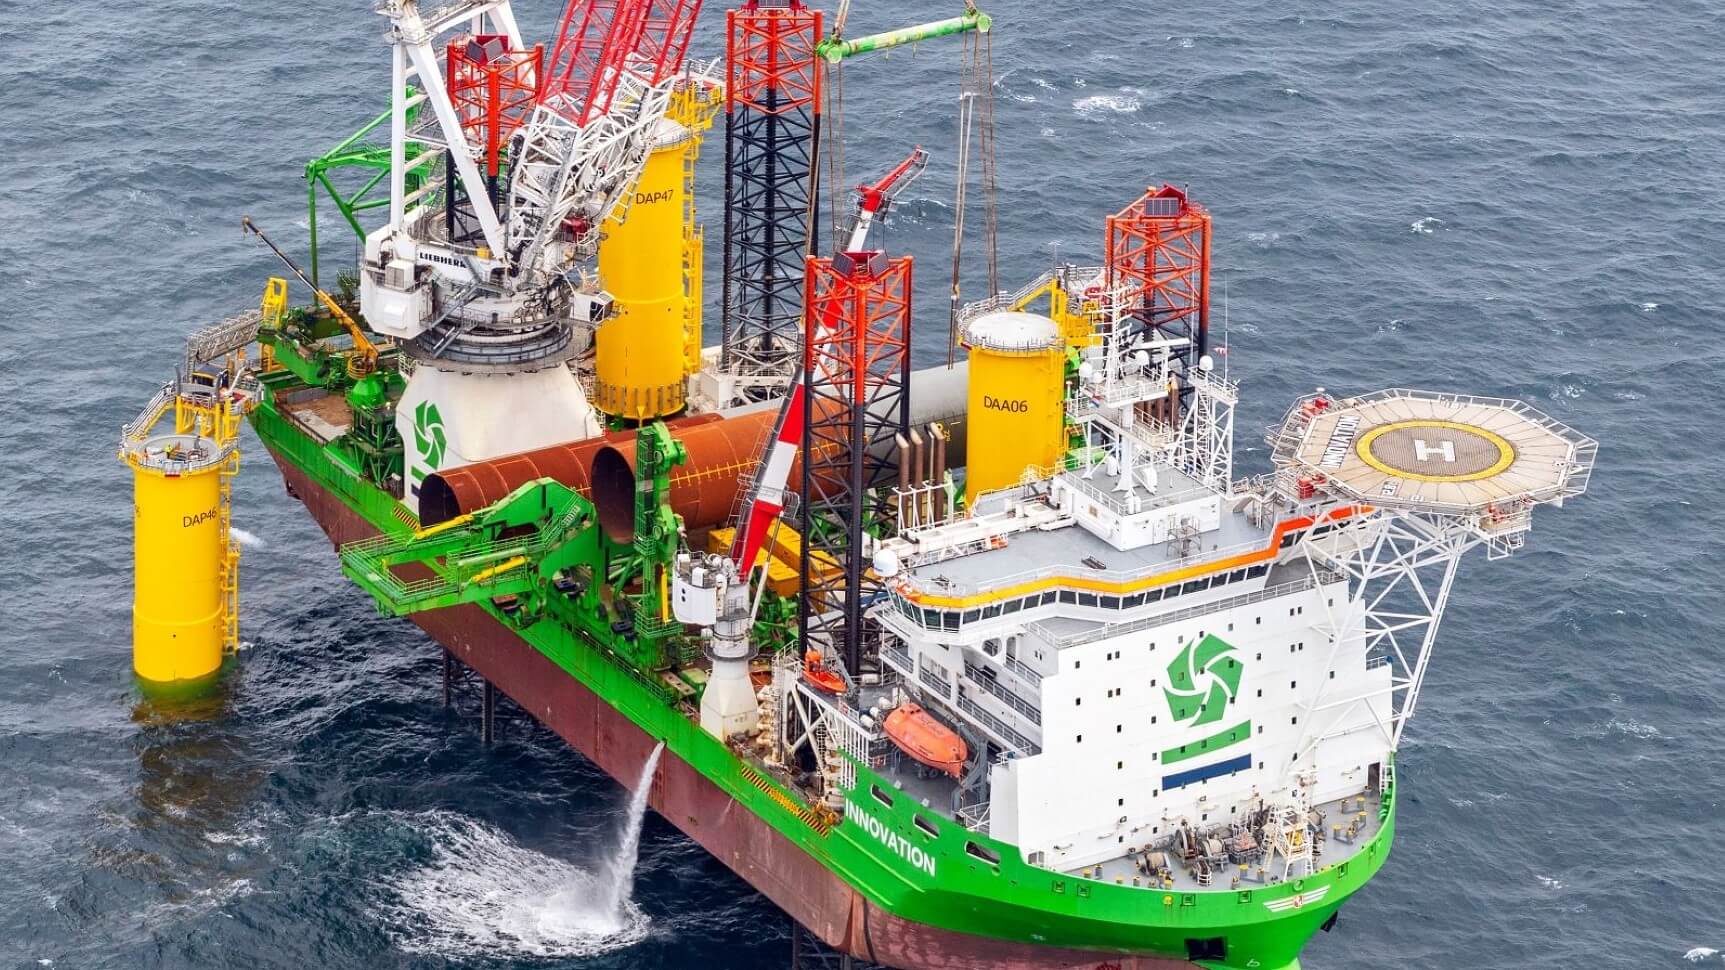 Crane on vessel at sea lifting wind turbine foundation into position